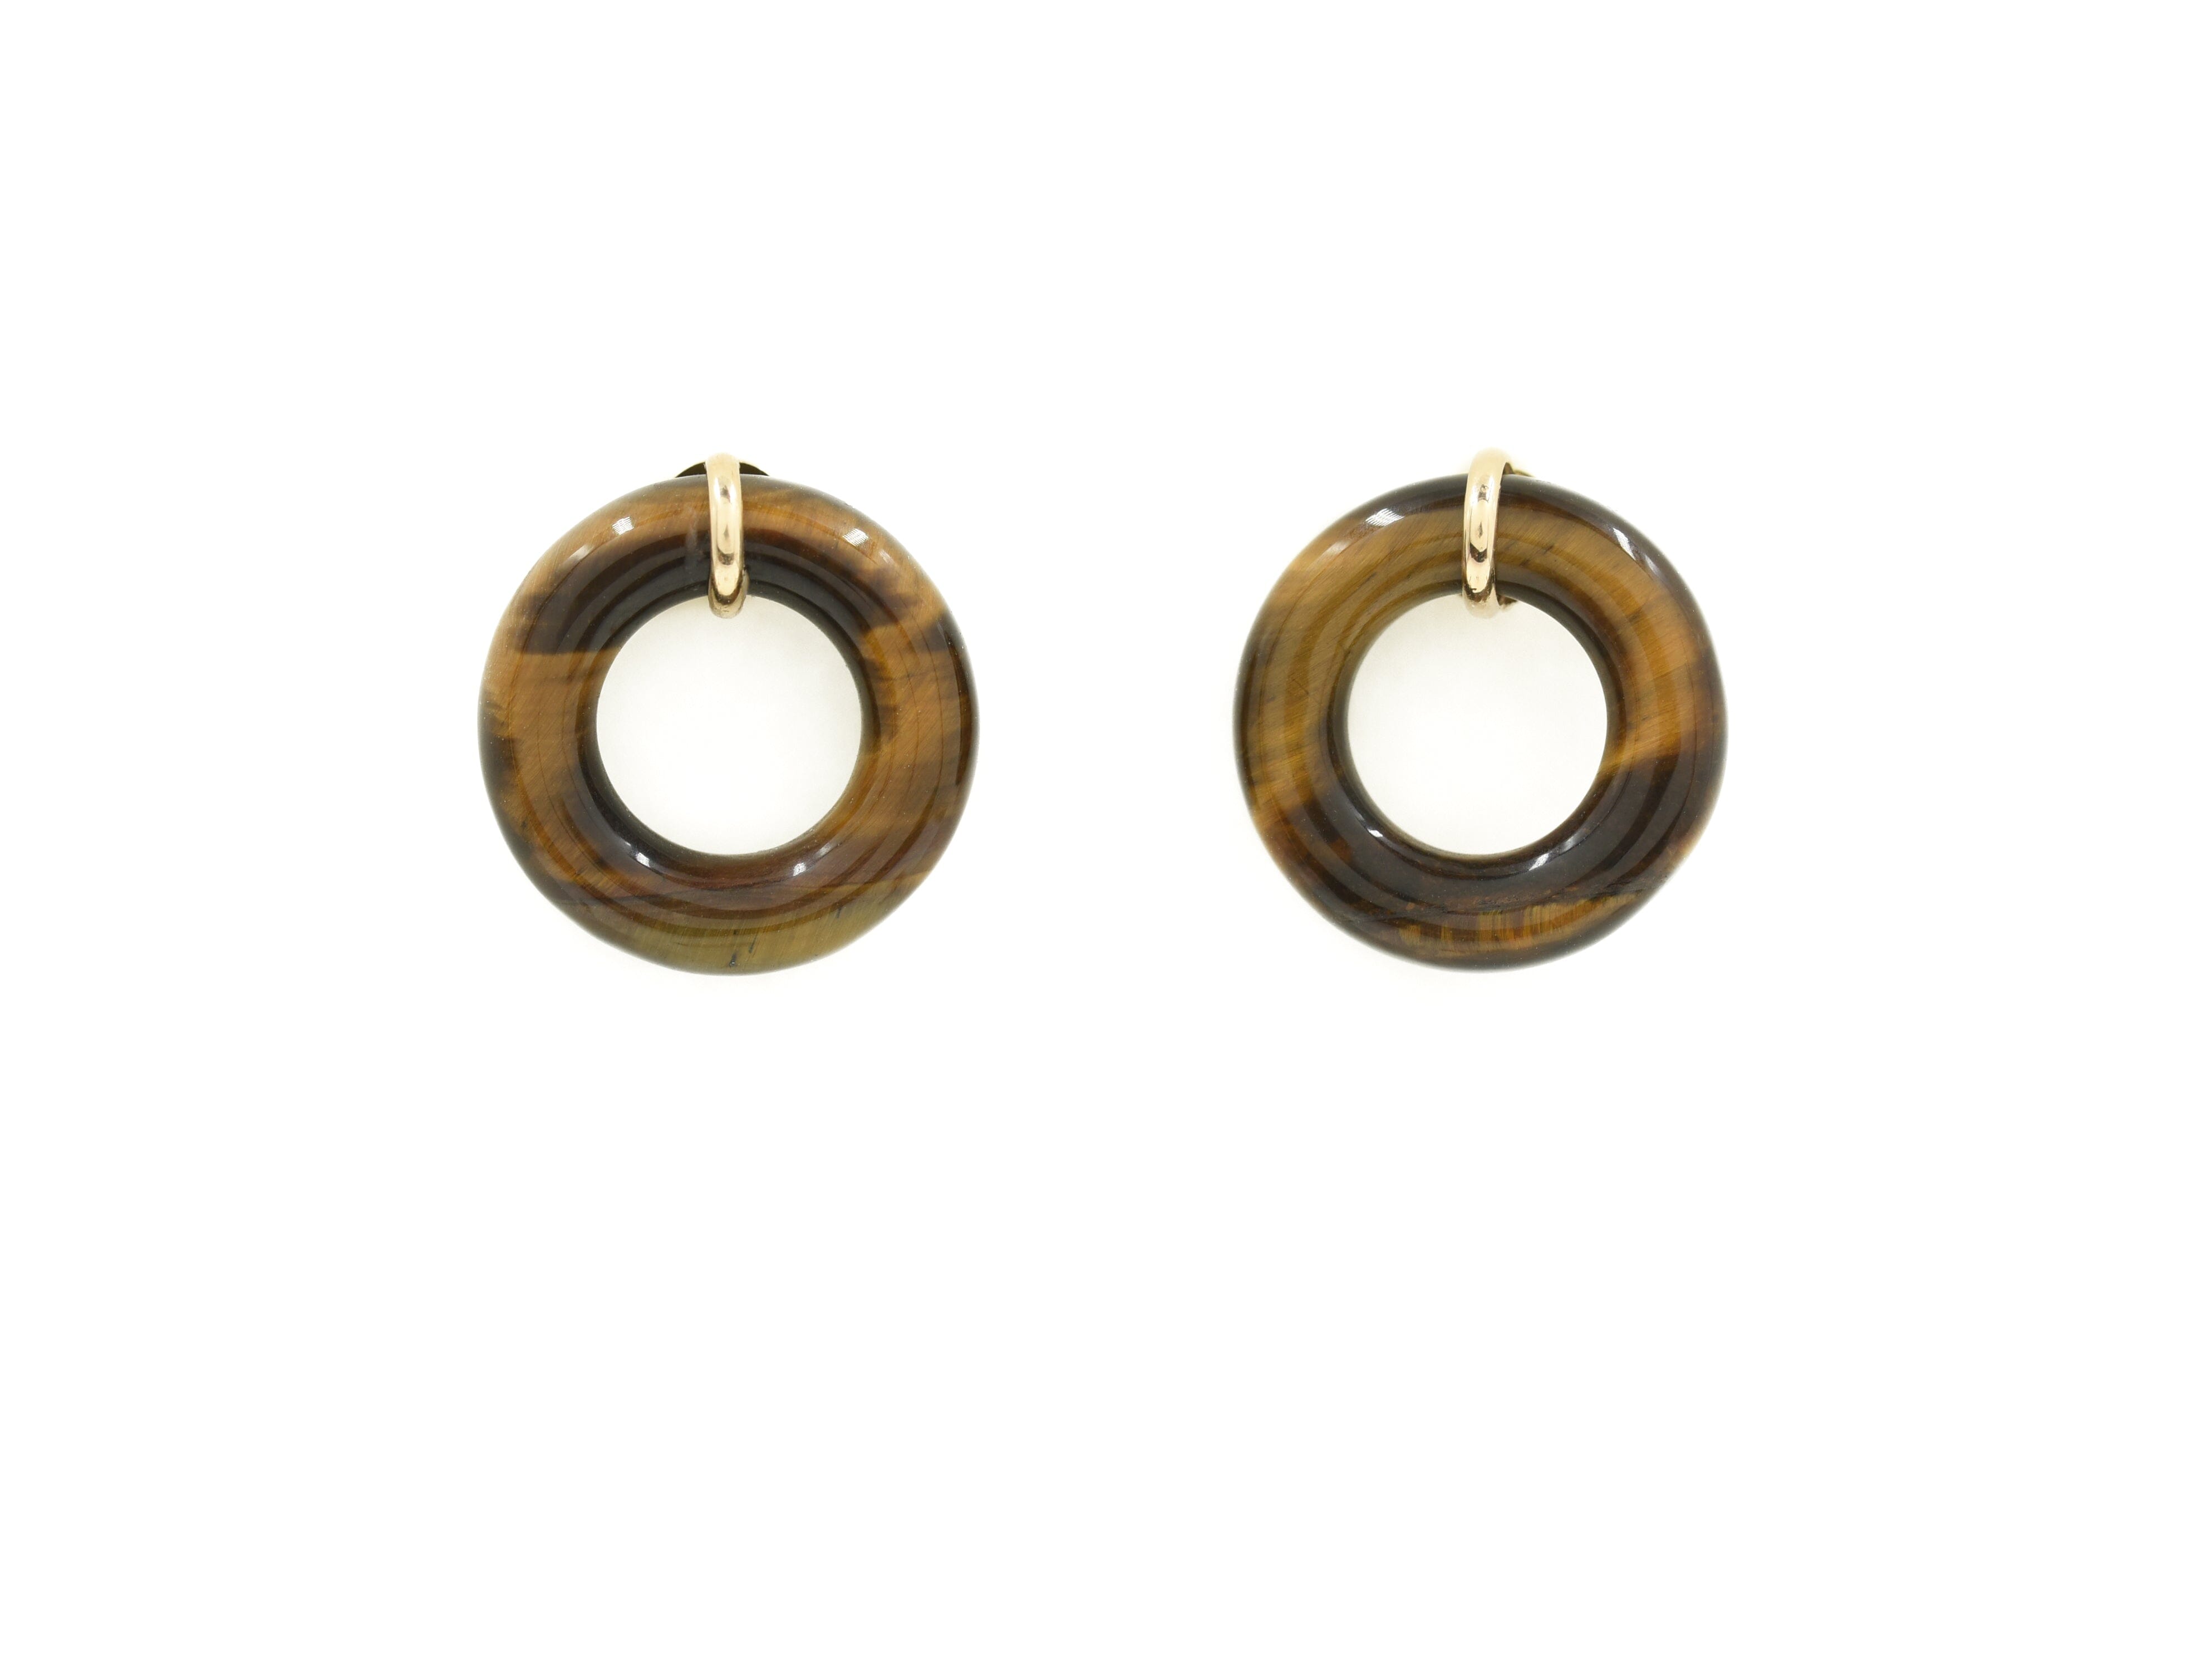 Coffee Crumble Munchkin Earrings - BONDEYE JEWELRY ®